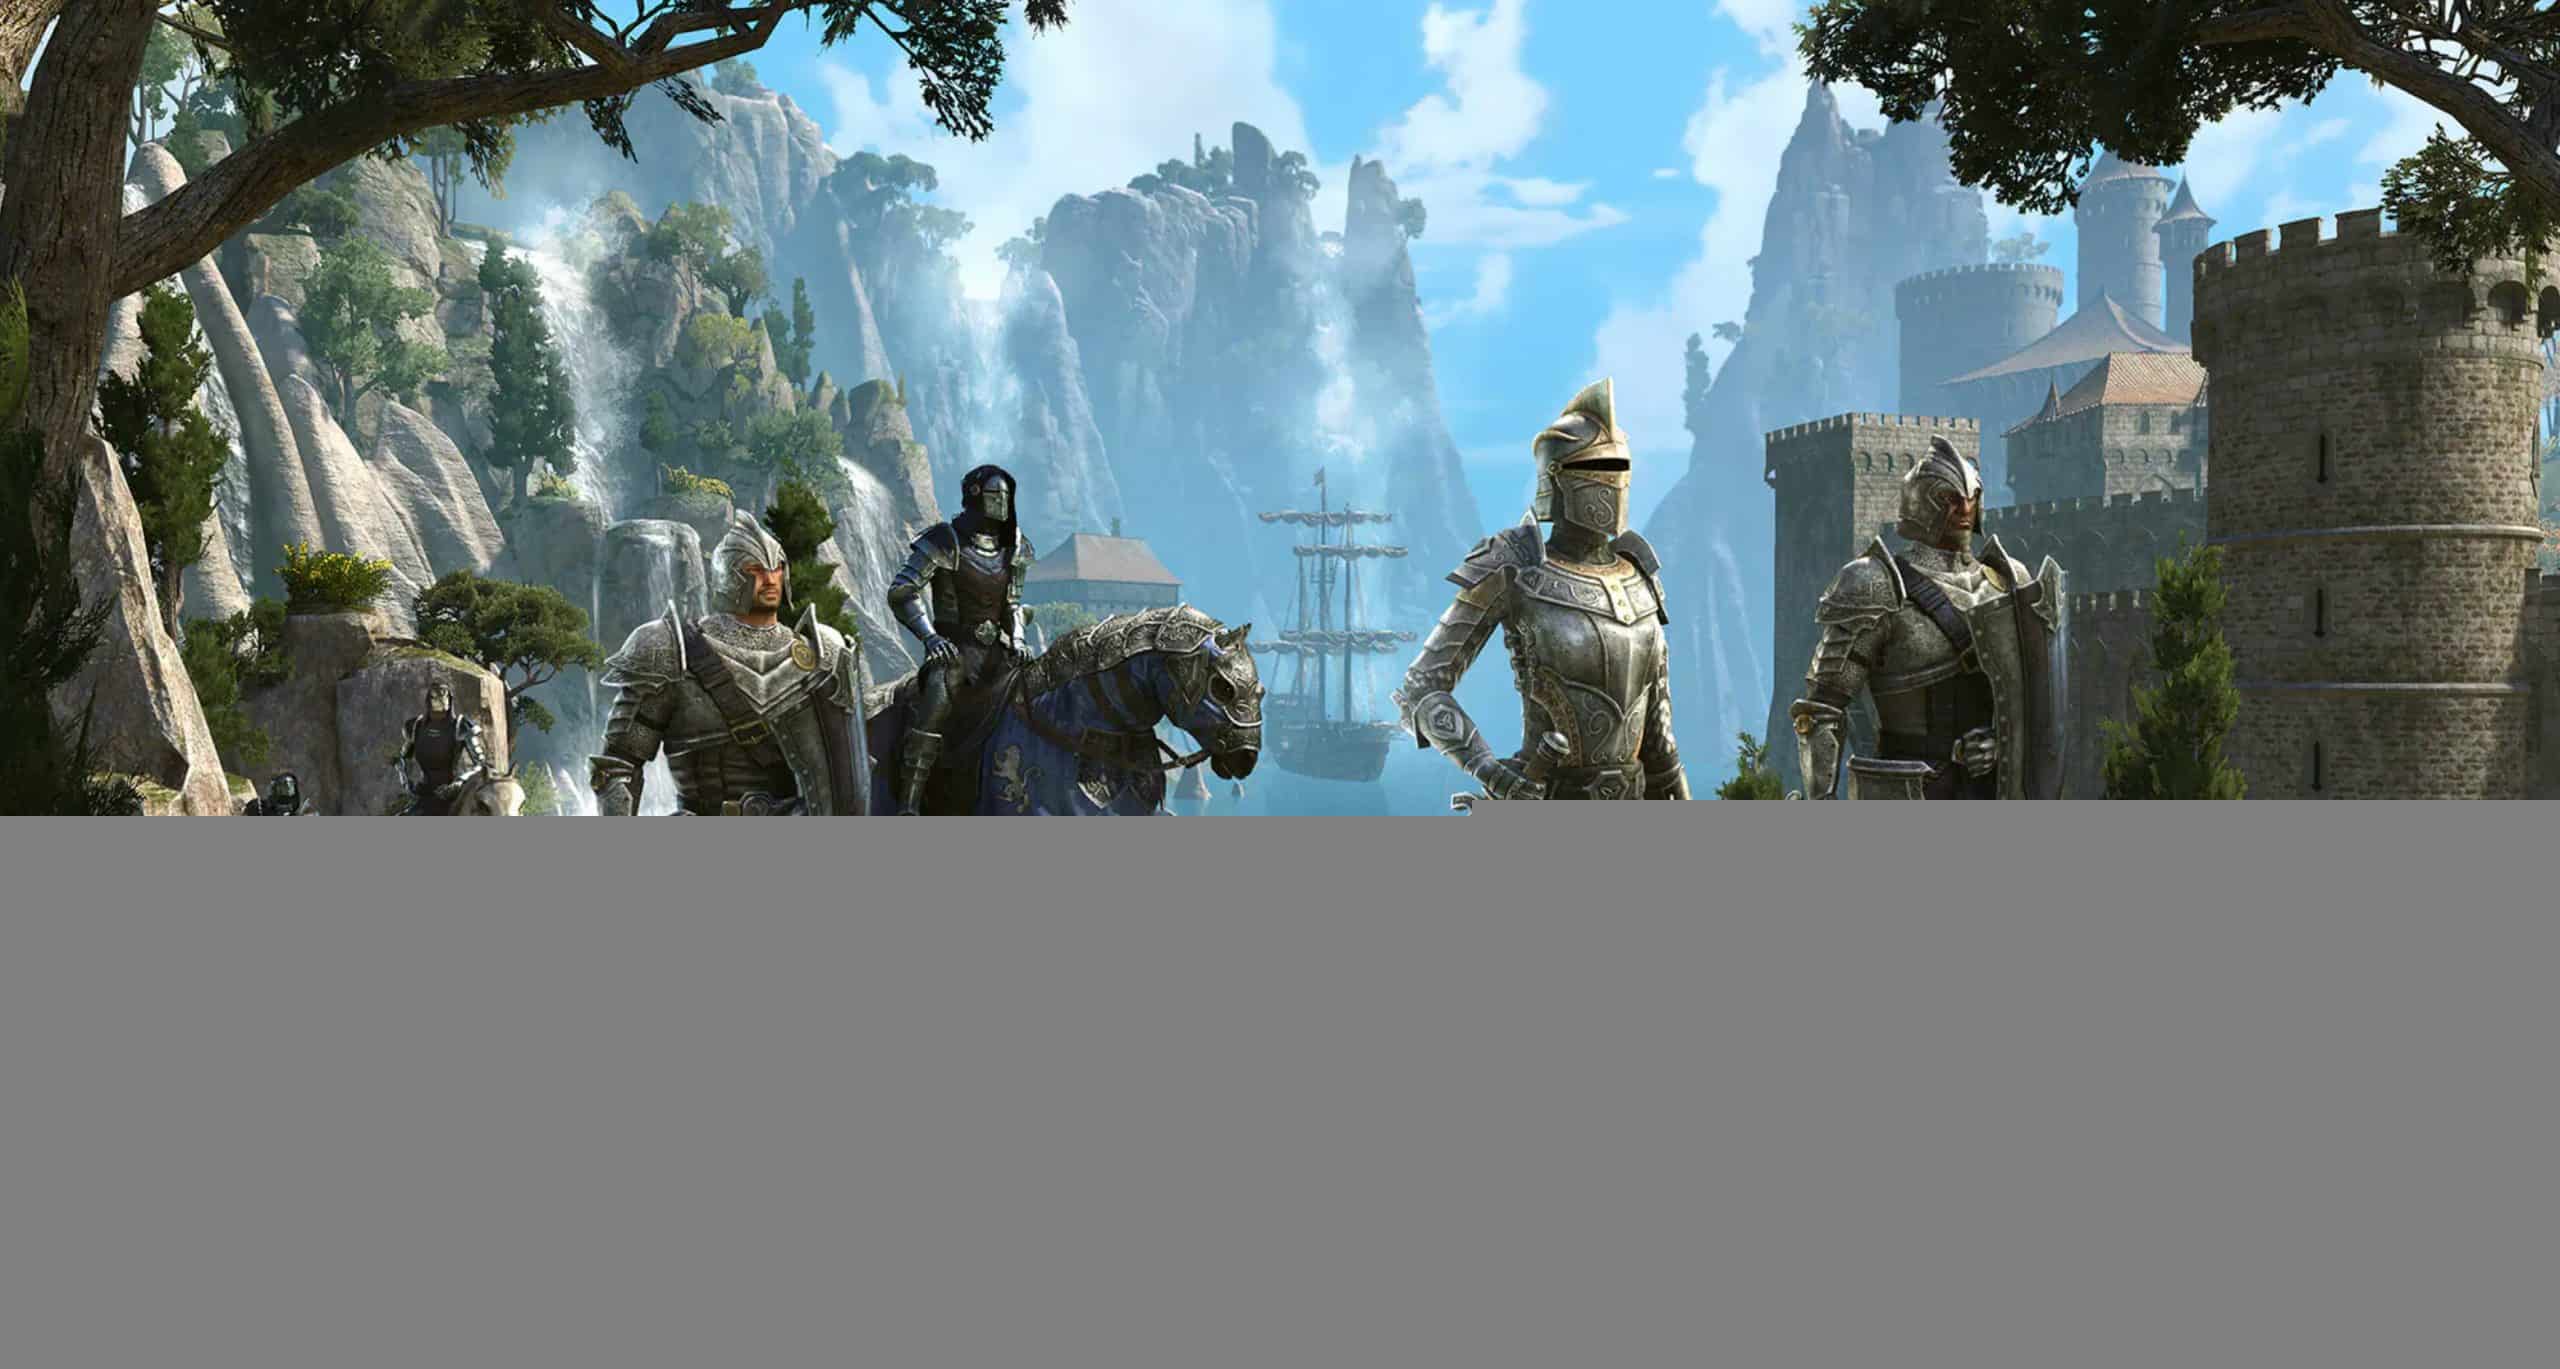 Elder Scrolls Online High Rise announced - featured